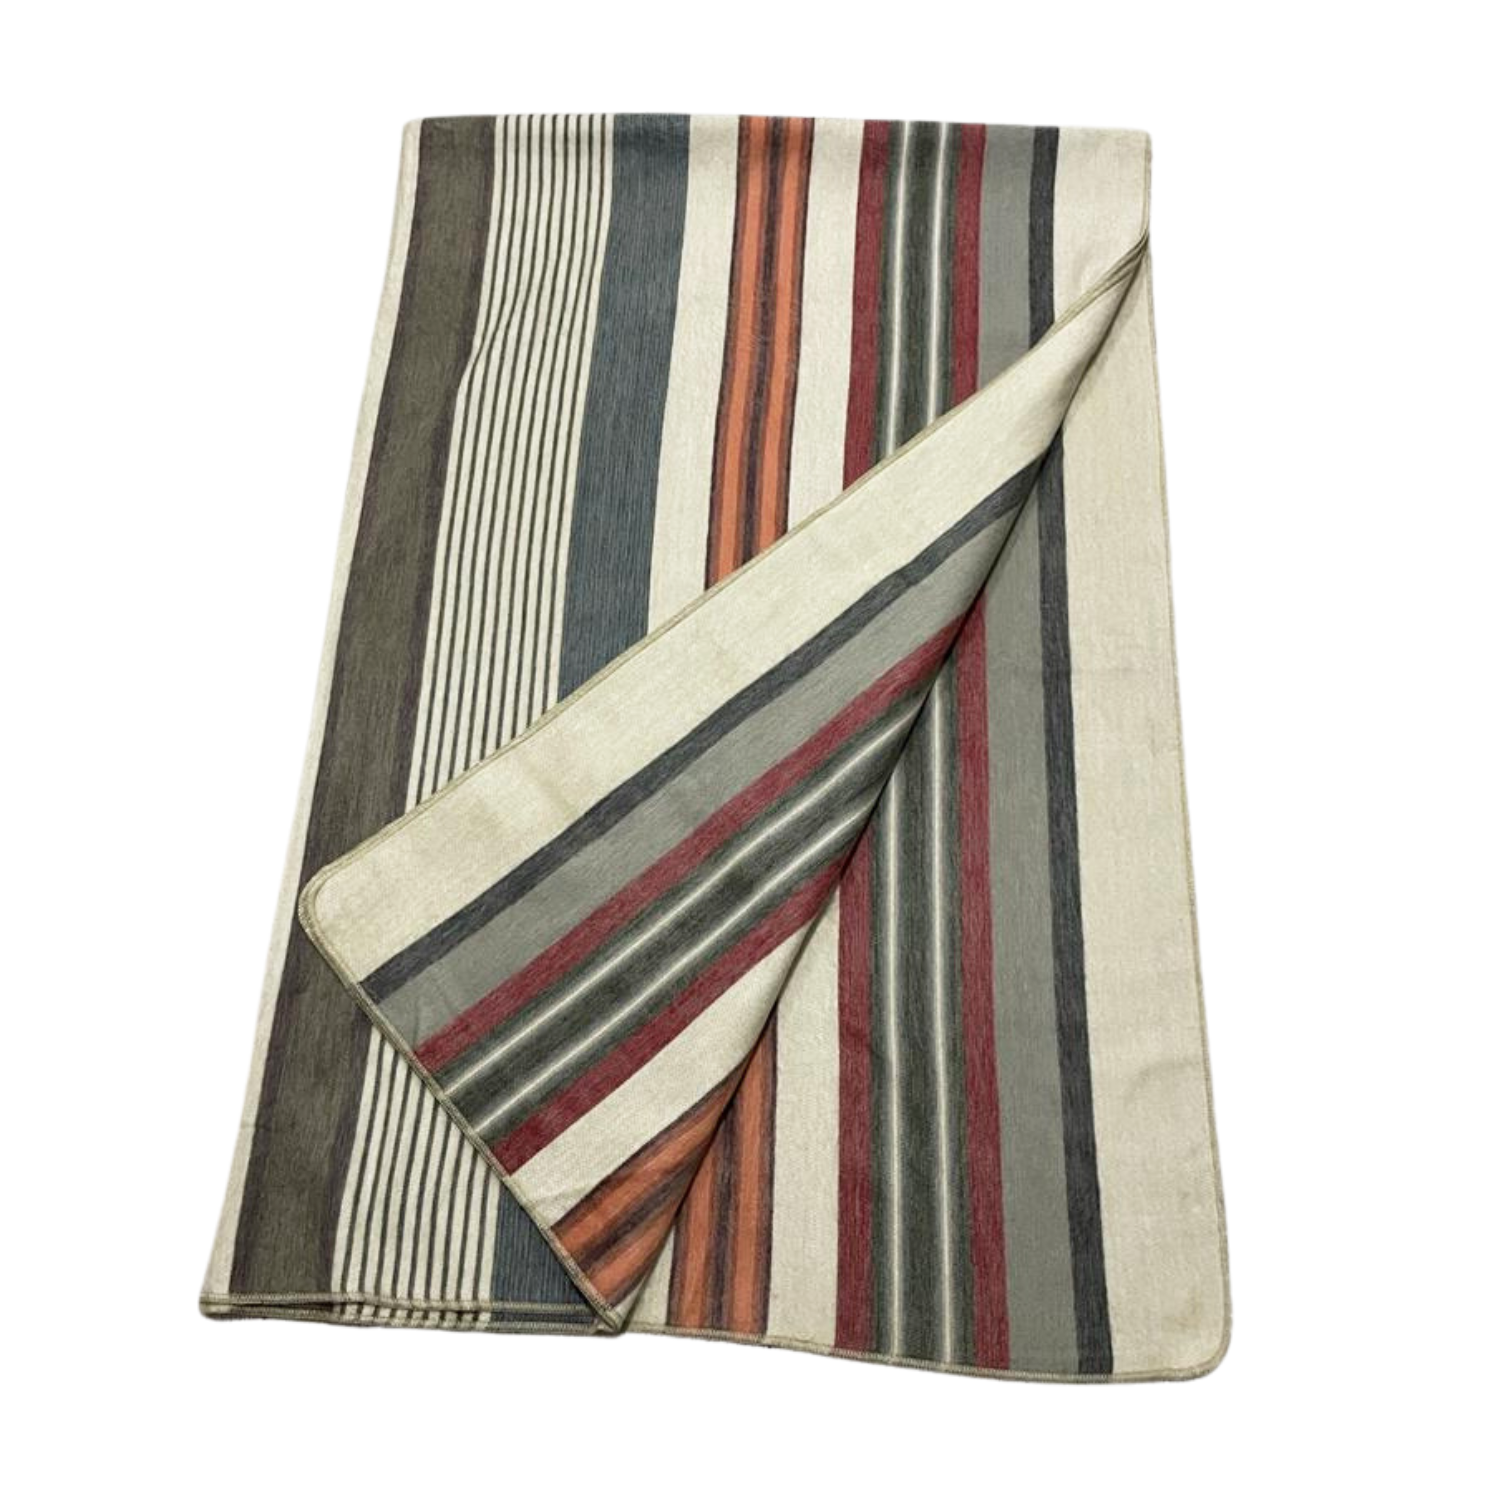 Cozy Luxurious Striped Alpaca Wool Blanket Artisan Home Decor